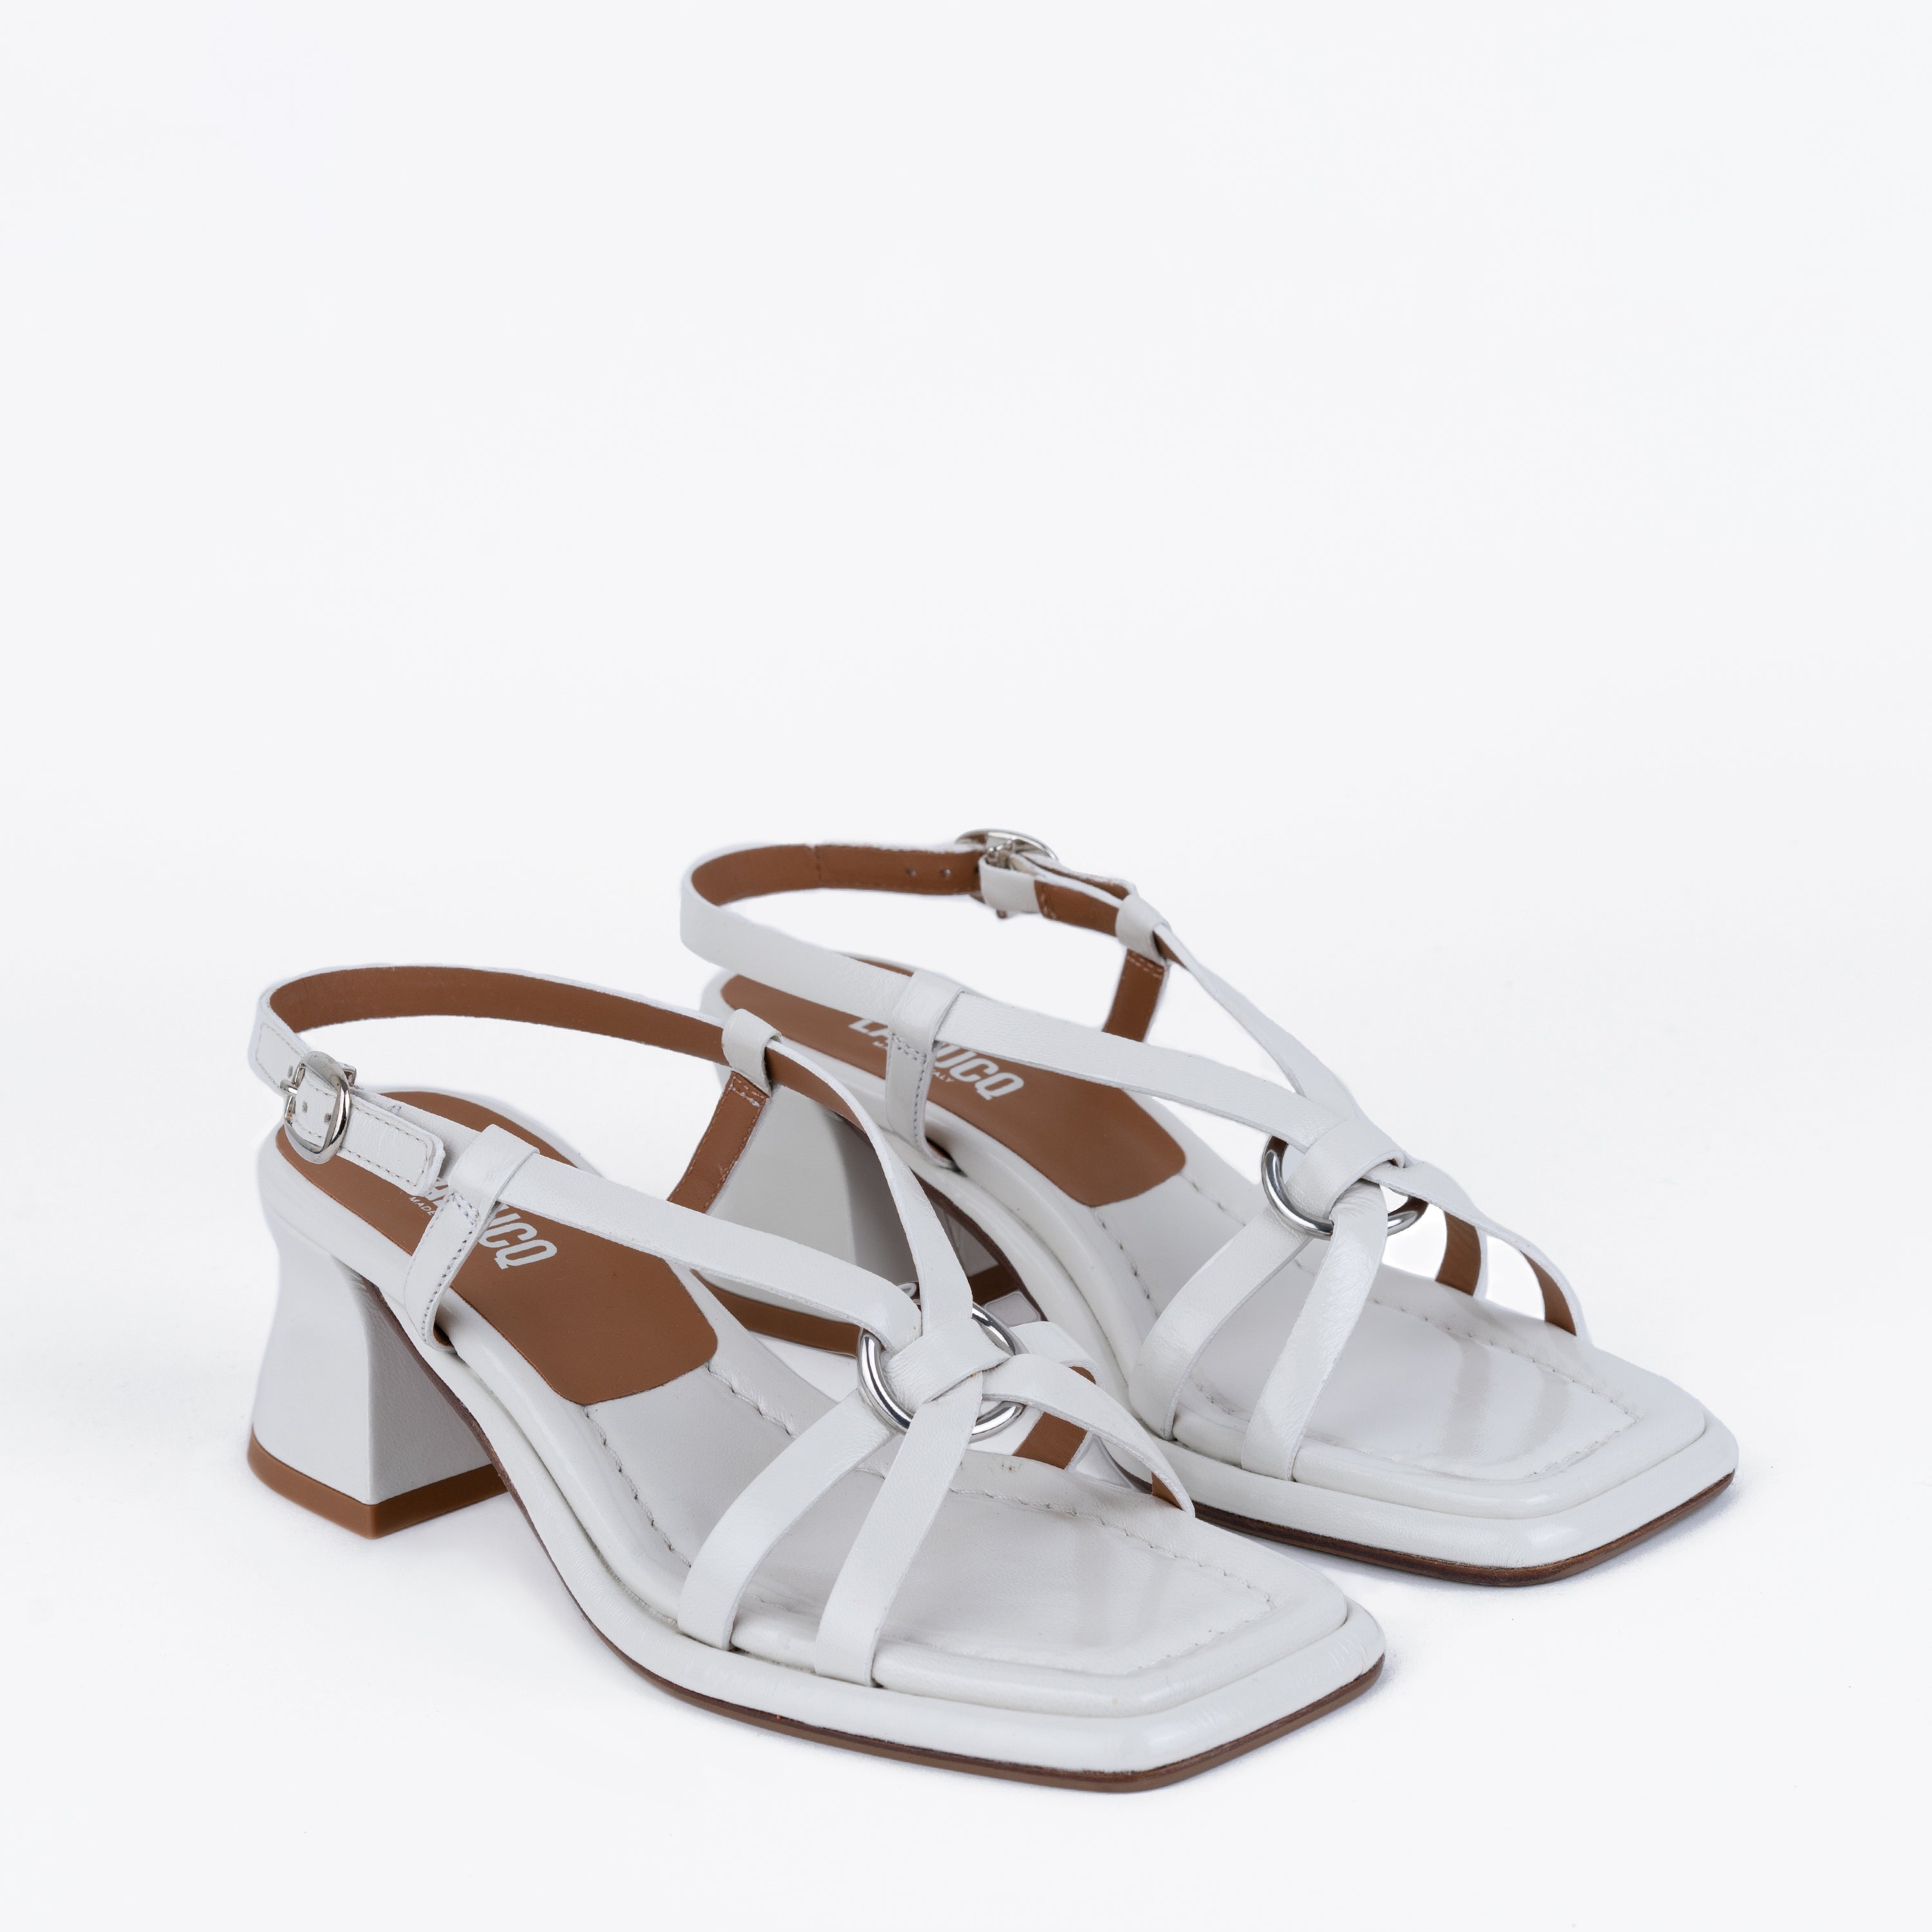 Labucq | Footwear | Made in Italy